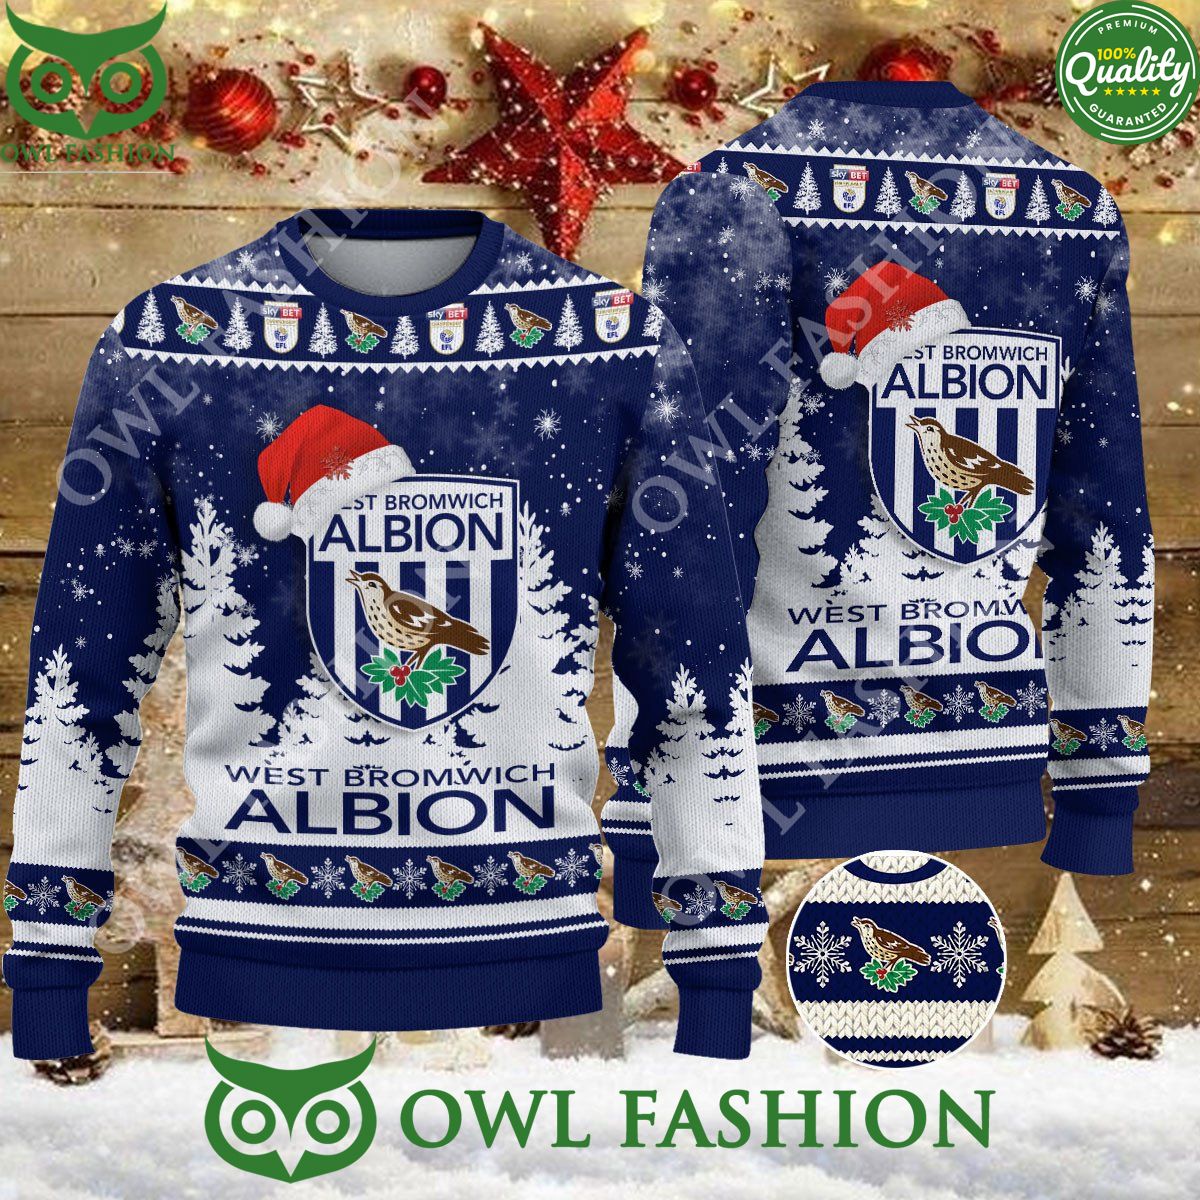 west bromwich albion fc christmas efl ugly premier league sweater jumper 1 CyQic.jpg